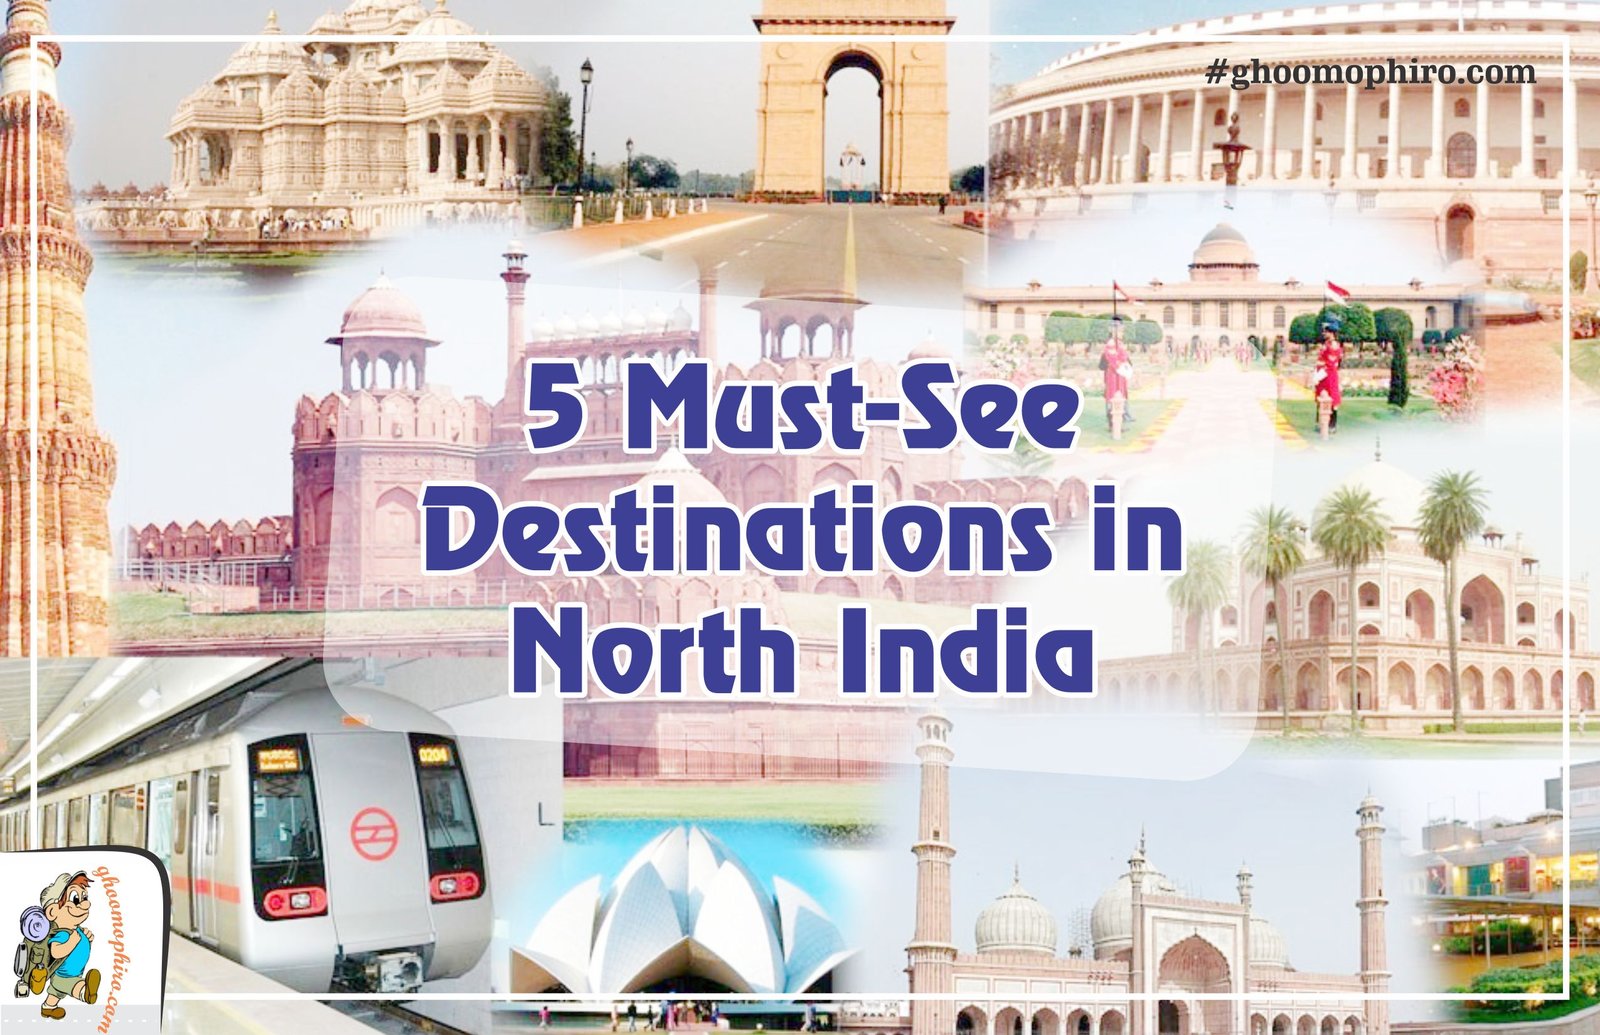 Destinations in North India